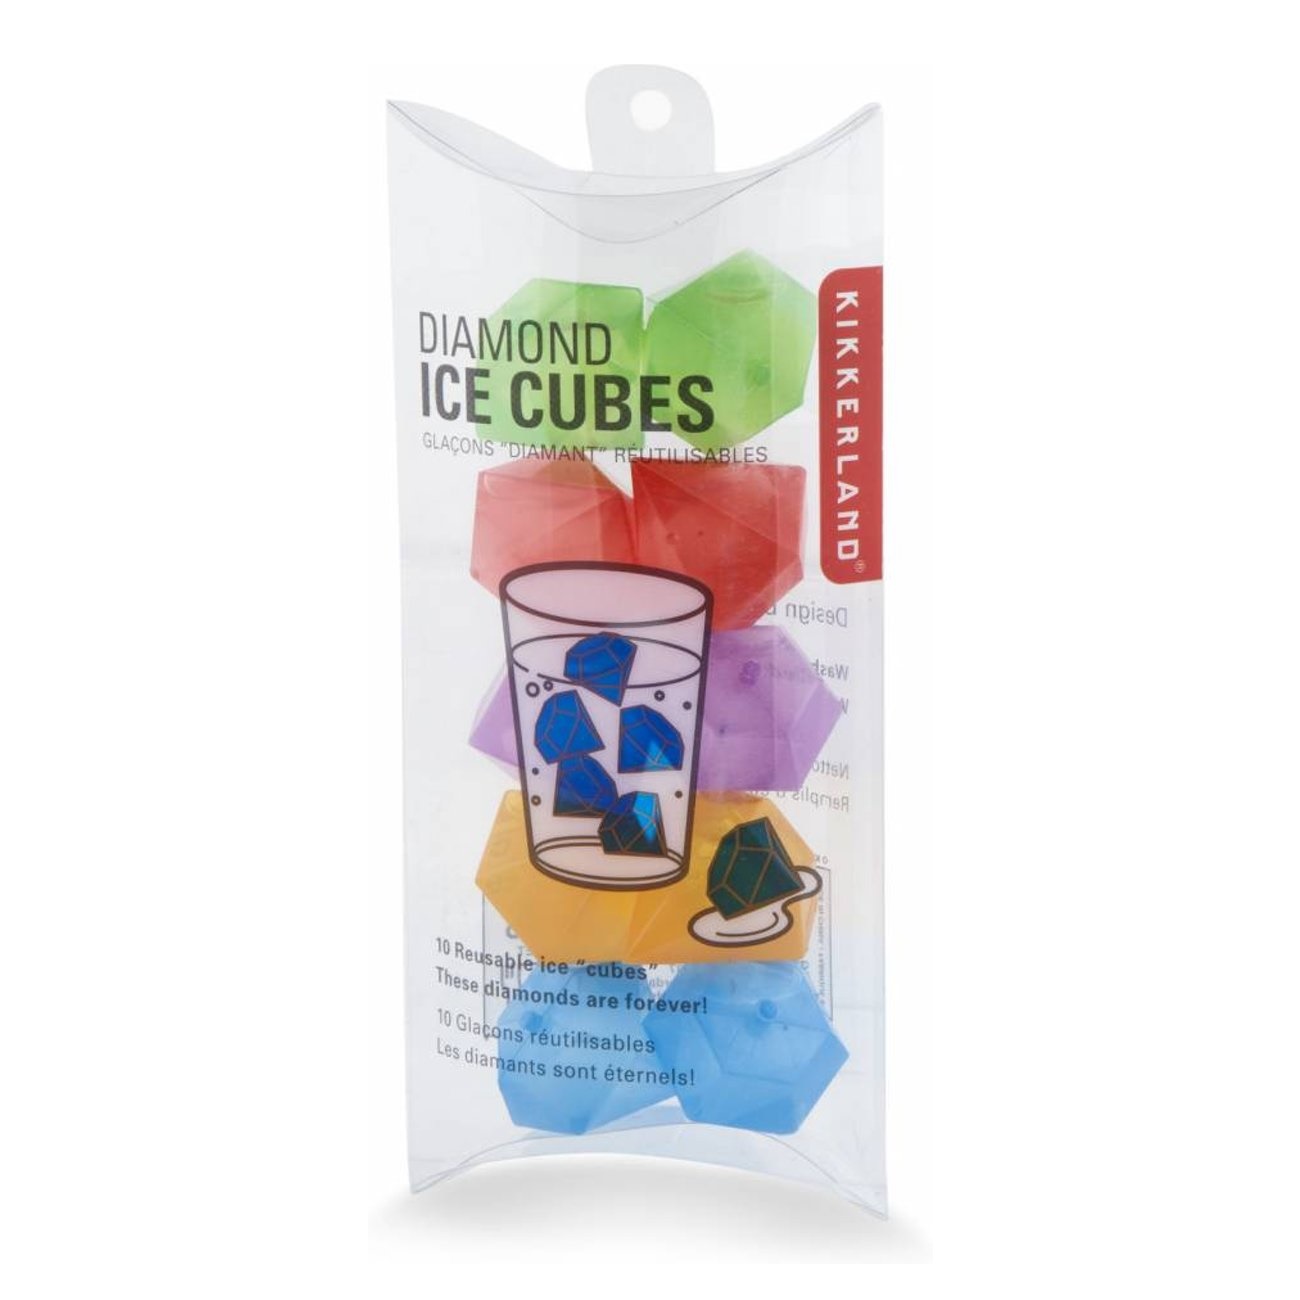 Reusable ice cubes diamonds